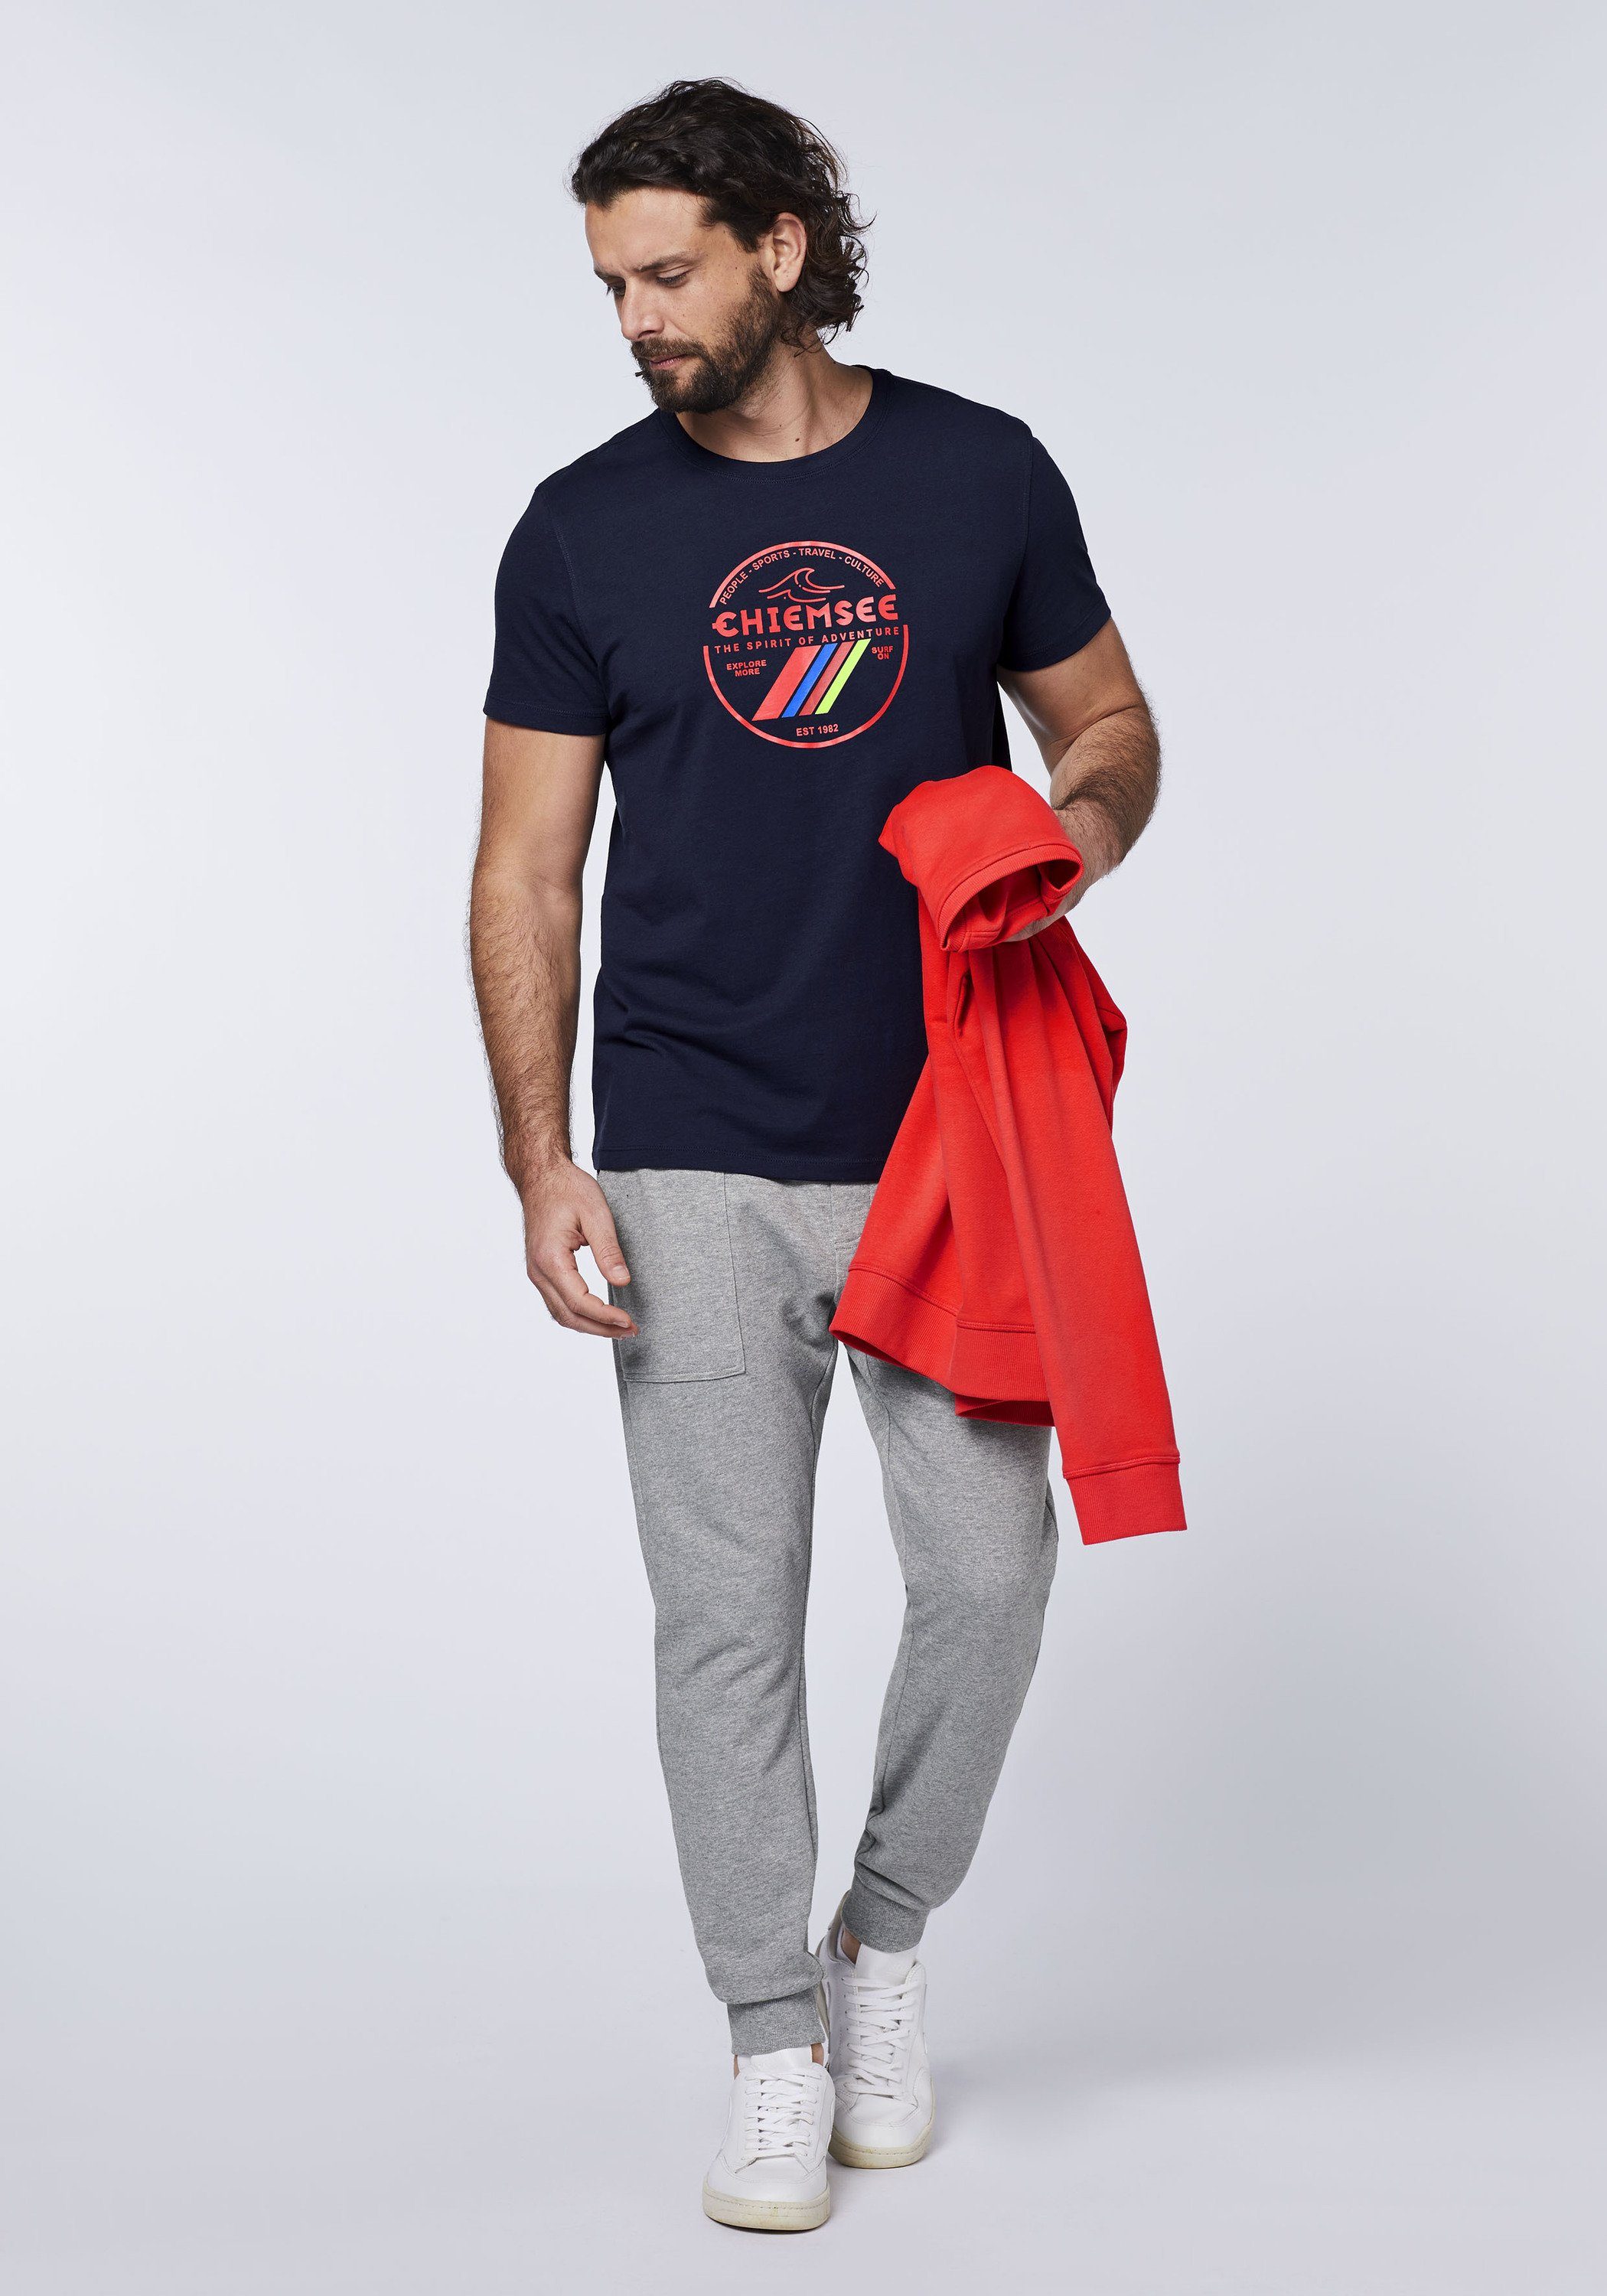 19-3924 T-Shirt Label-Frontprint Baumwolle Night Chiemsee 1 Sky Print-Shirt mit aus